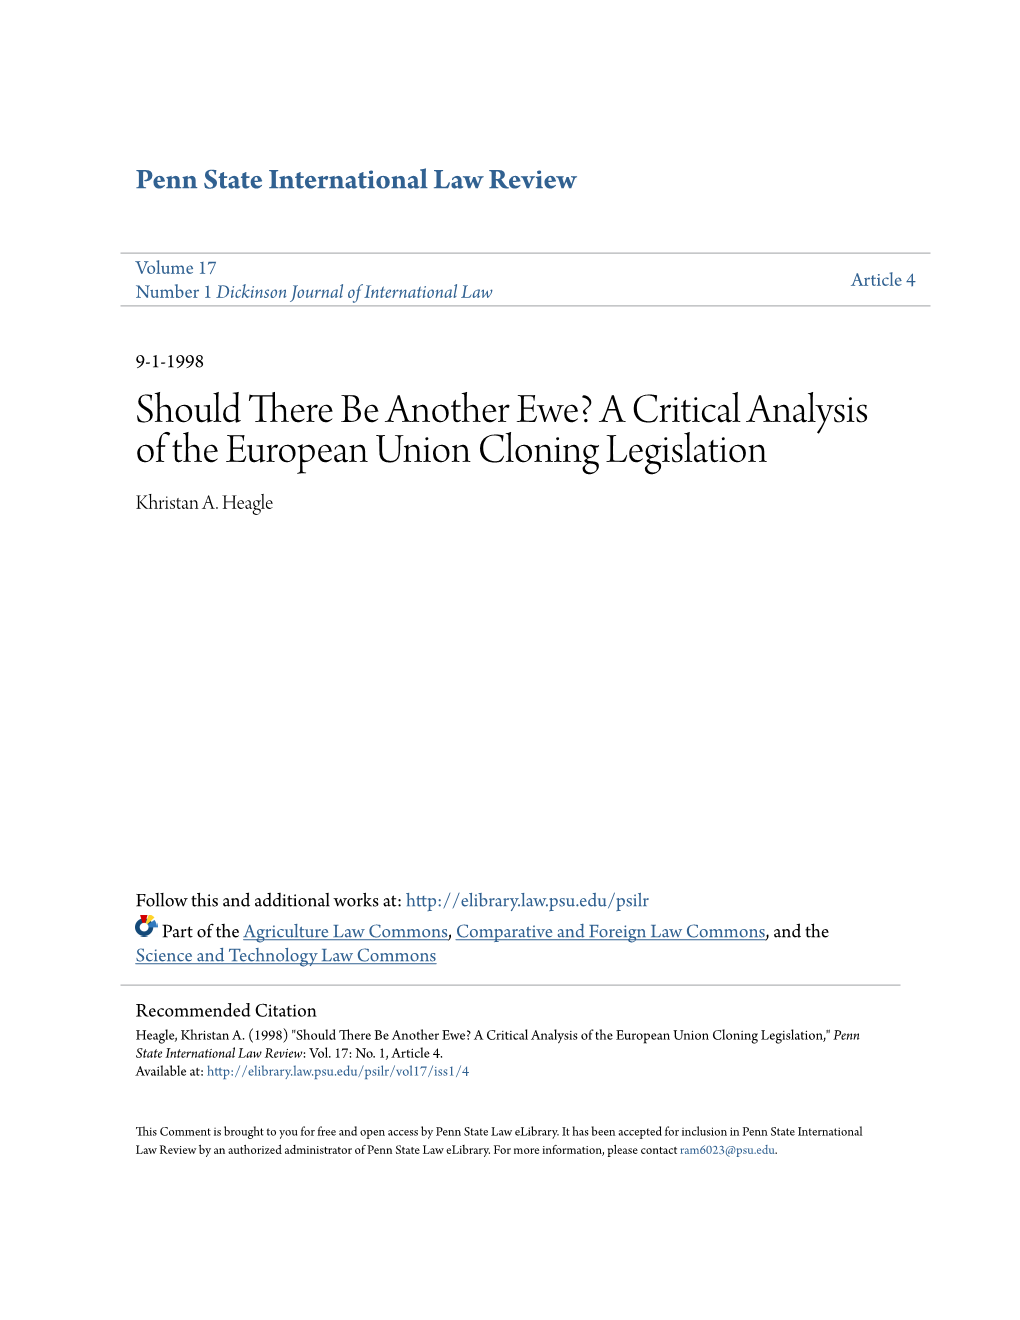 A Critical Analysis of the European Union Cloning Legislation Khristan A